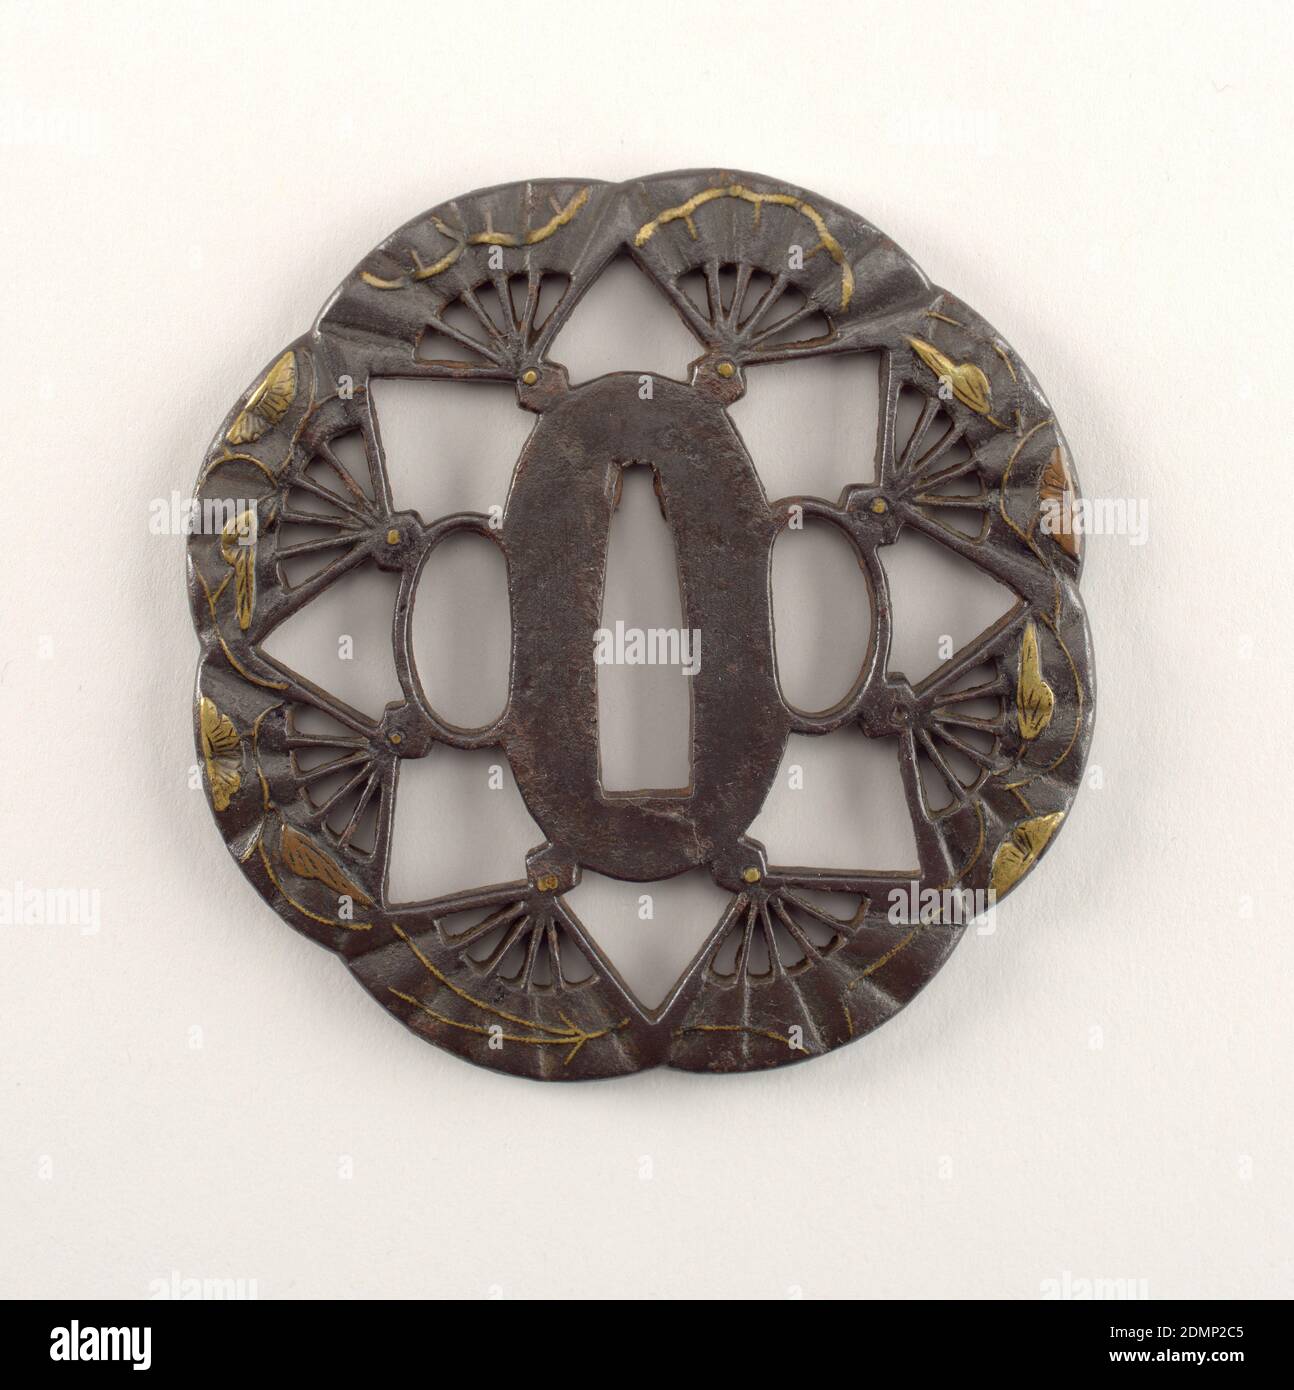 Tsuba, Mixed and inlaid metals, Circle of open fans, 18th century, metalwork, Decorative Arts, Tsuba Stock Photo